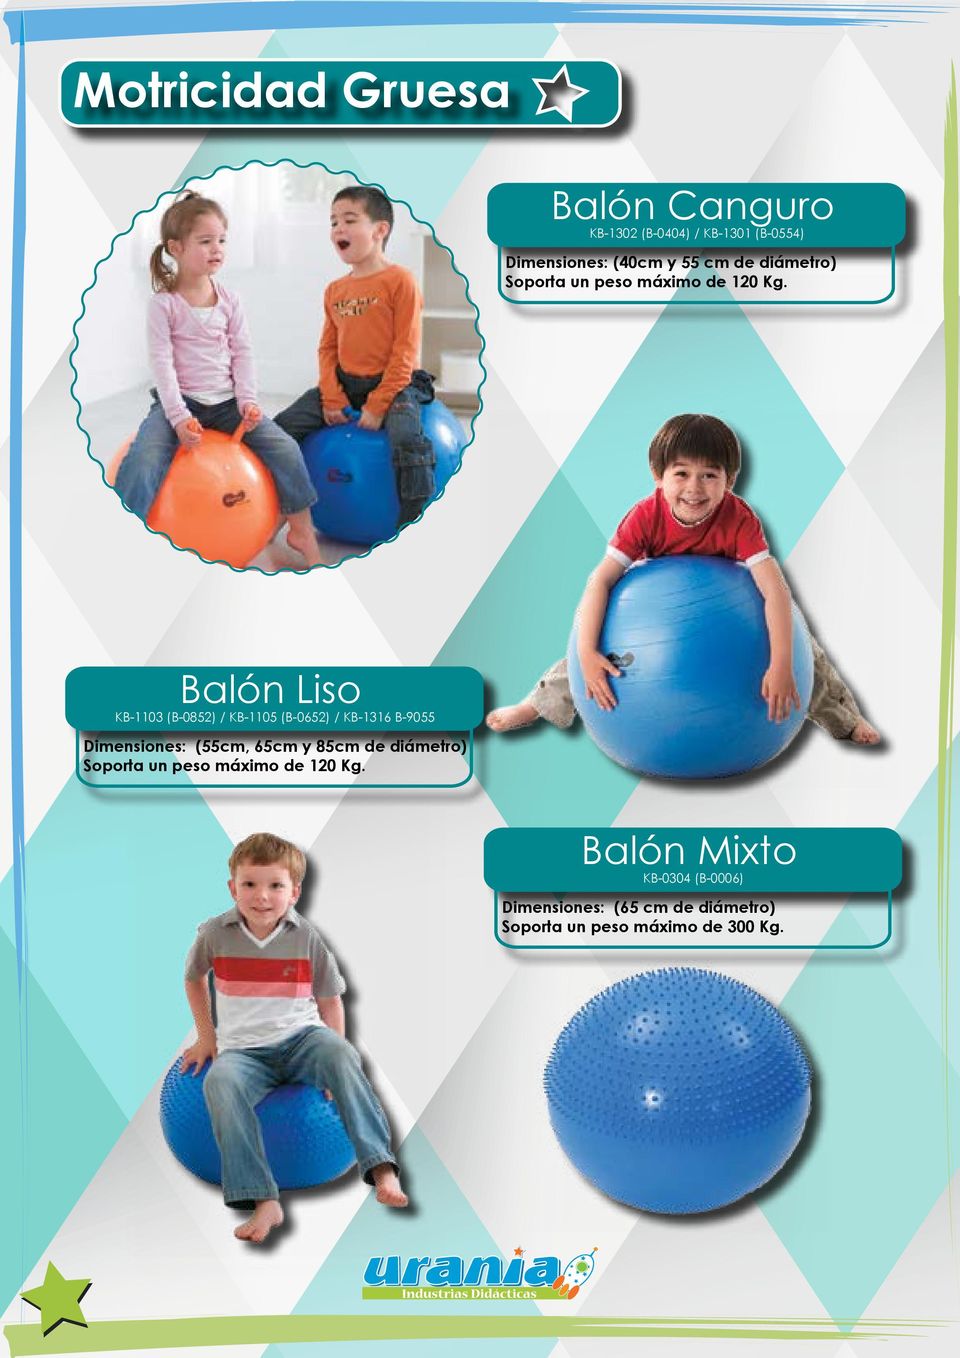 Balón Liso KB-1103 (B-0852) / KB-1105 (B-0652) / KB-1316 B-9055 (55cm, 65cm y 85cm de